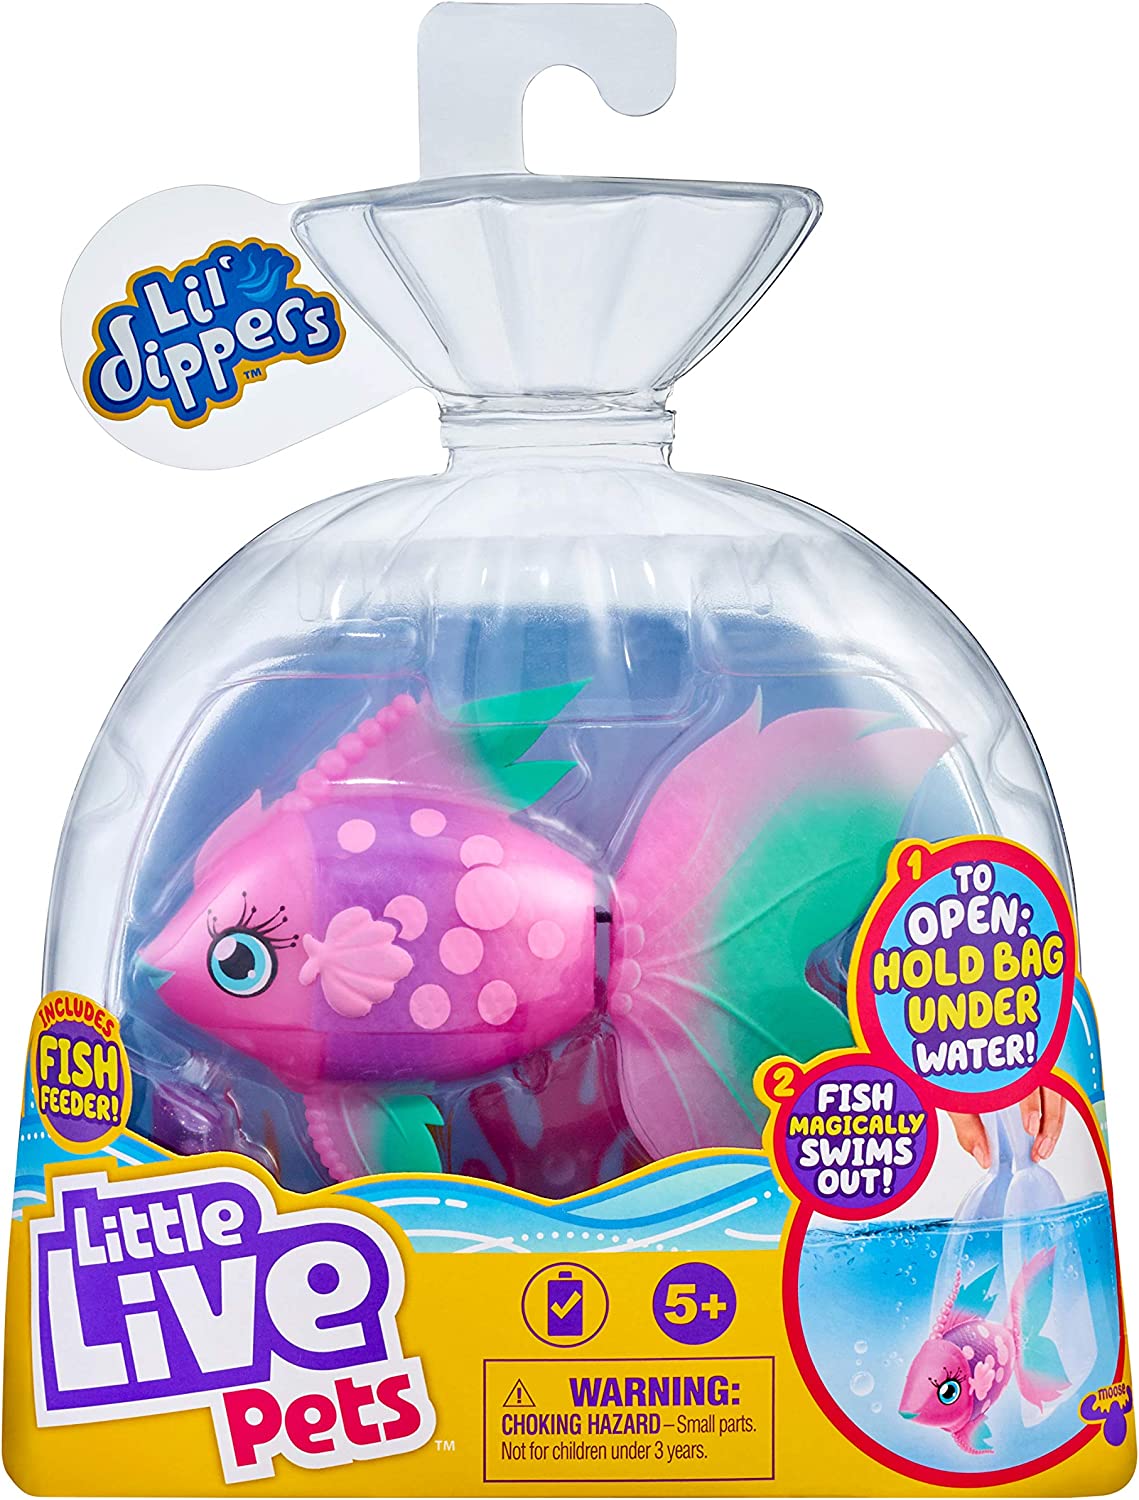 24 Cute Soft Fish Figurines - Adorable Ocean Mini Toys - Easter